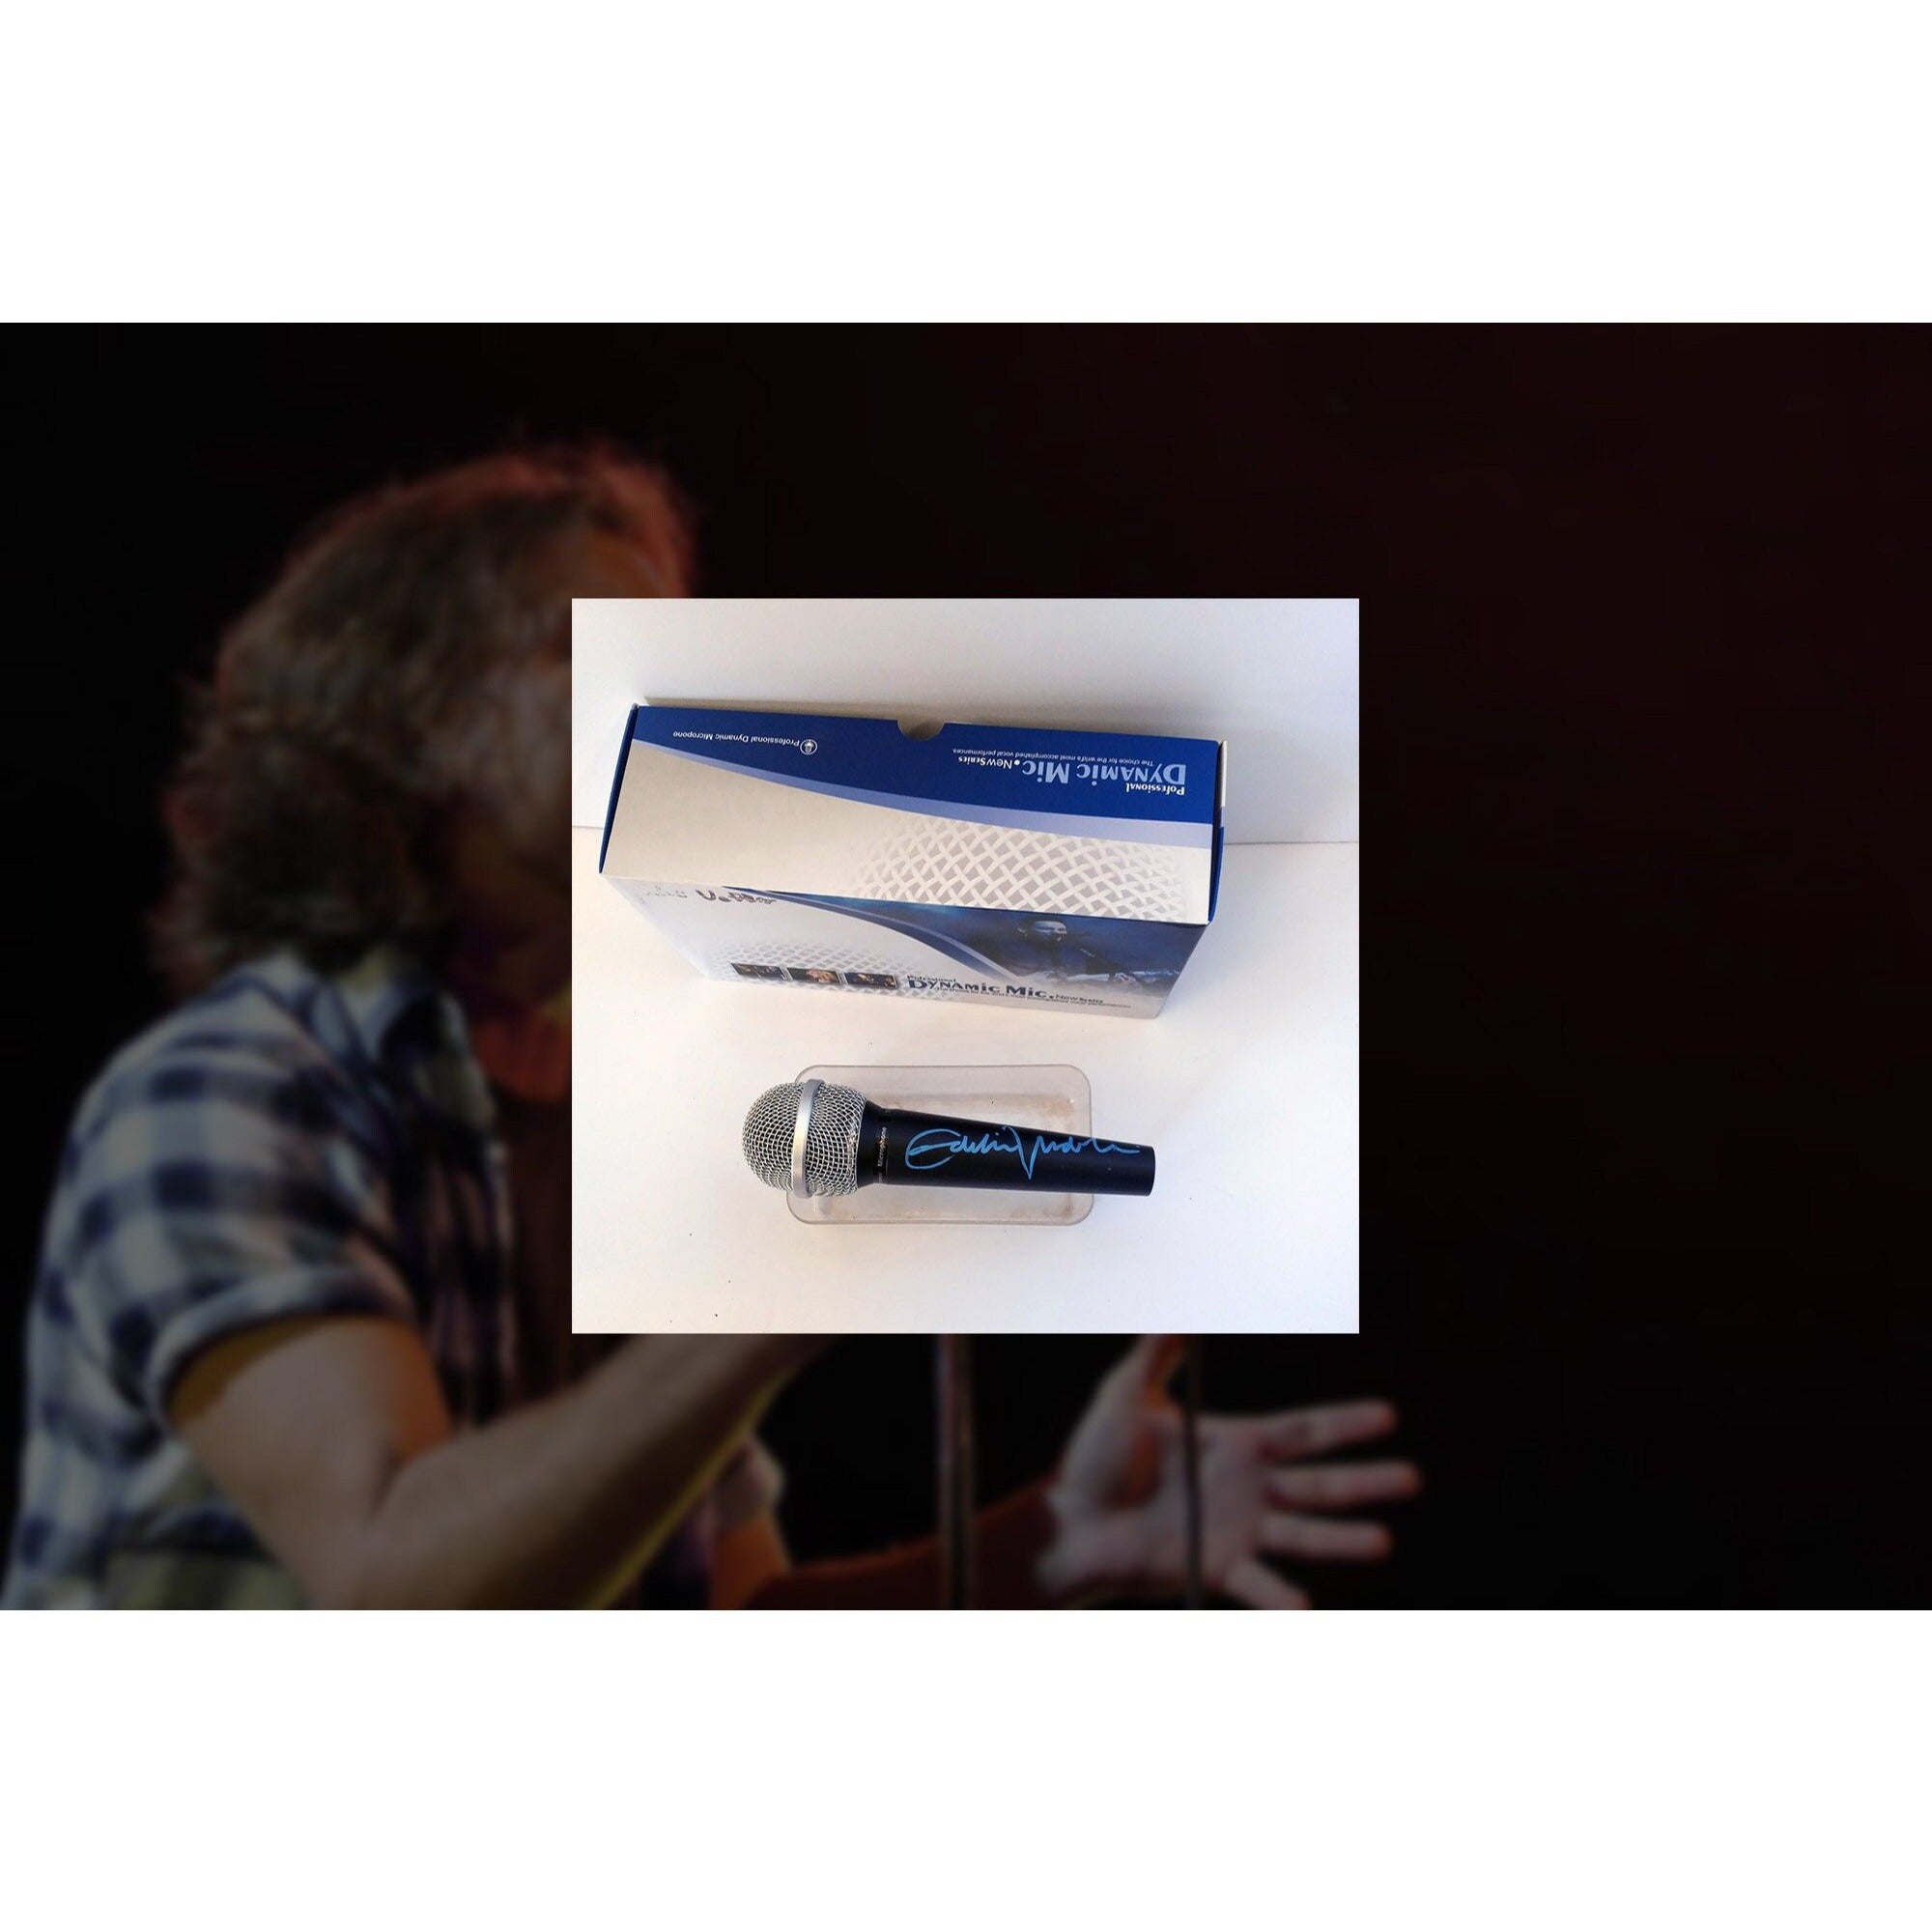 Eddie Vedder Pearl Jam signed microphone with proof